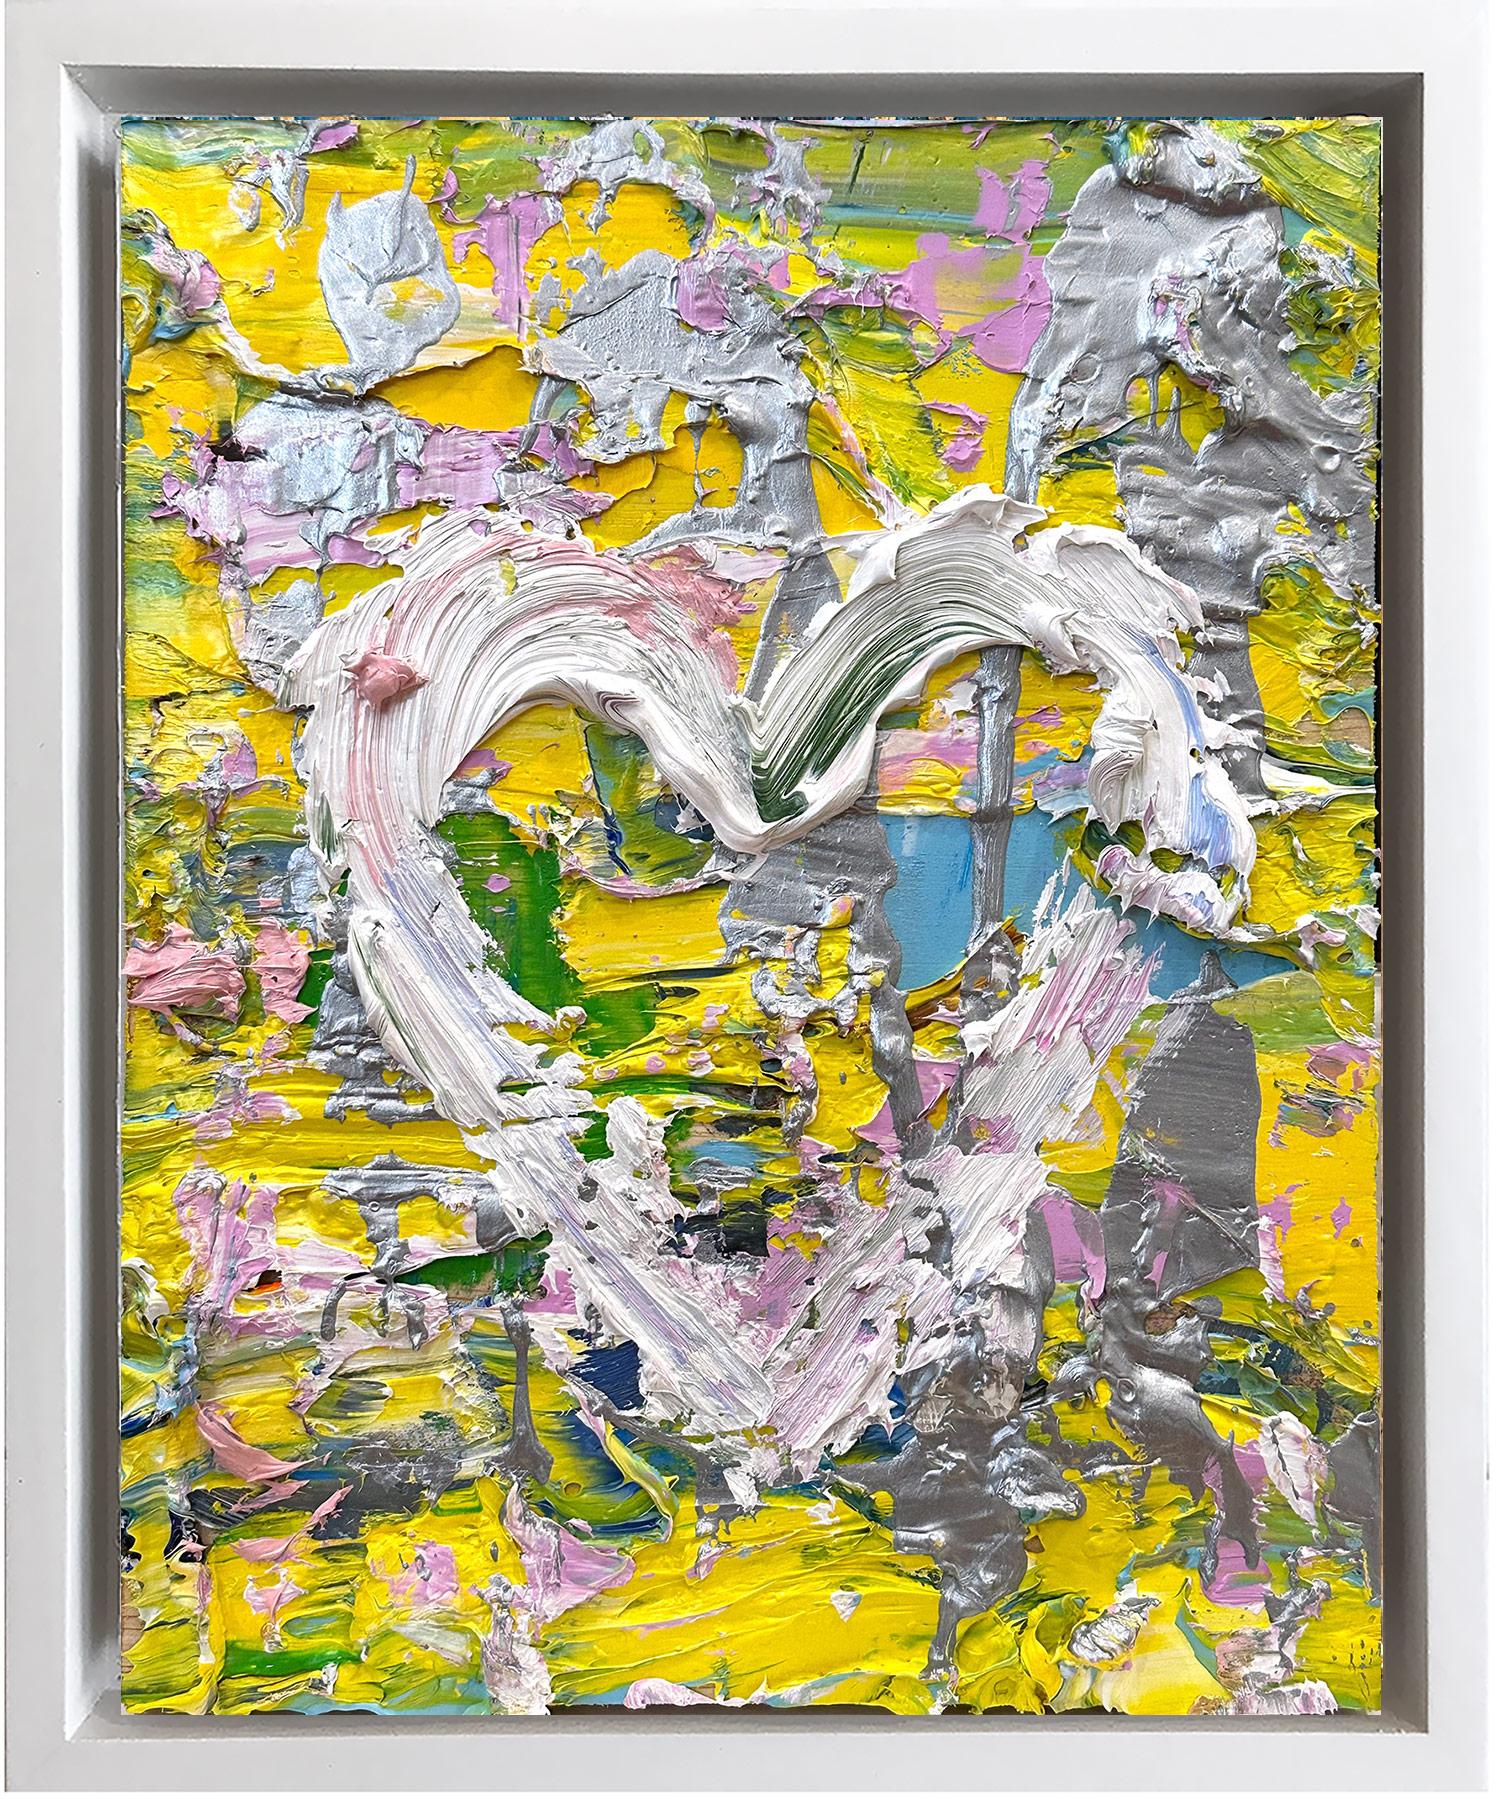 Figurative Painting Cindy Shaoul - « My Spring in Yves Saint Laurent Heart », peinture à l'huile pop art, cadre flottant blanc